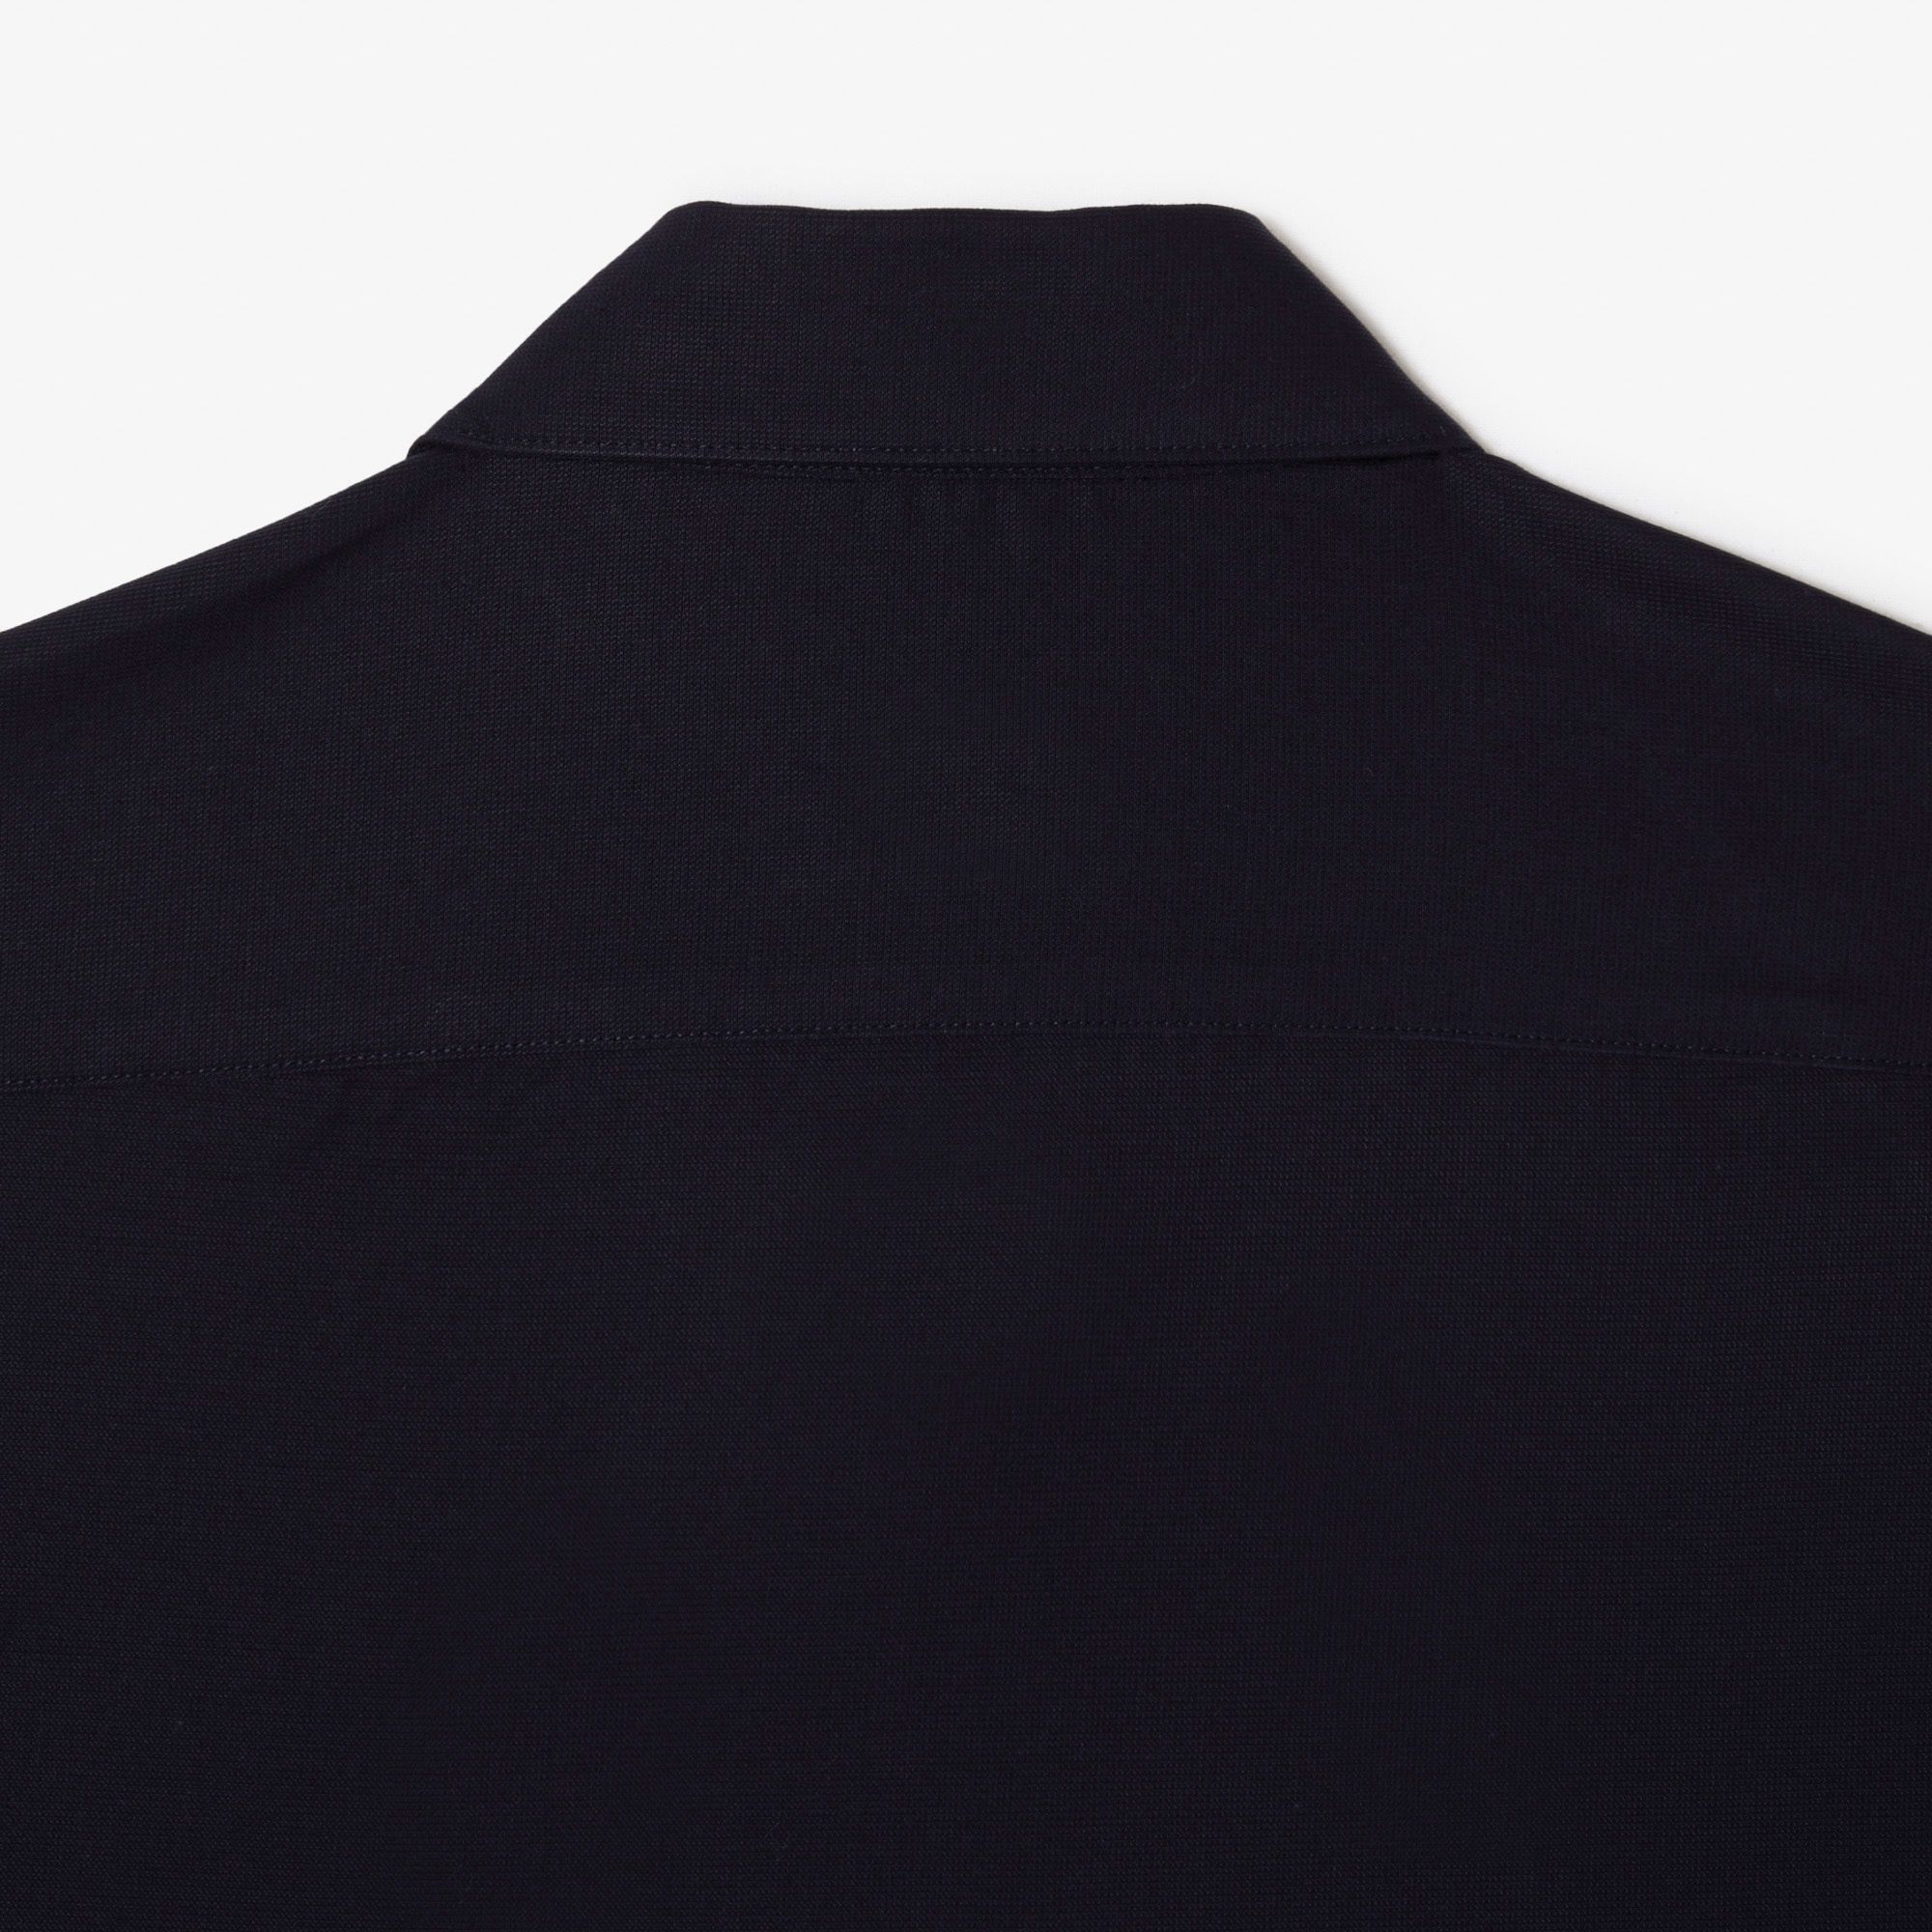  Lacoste Regular Fit Solid Cotton Shirt - Black 